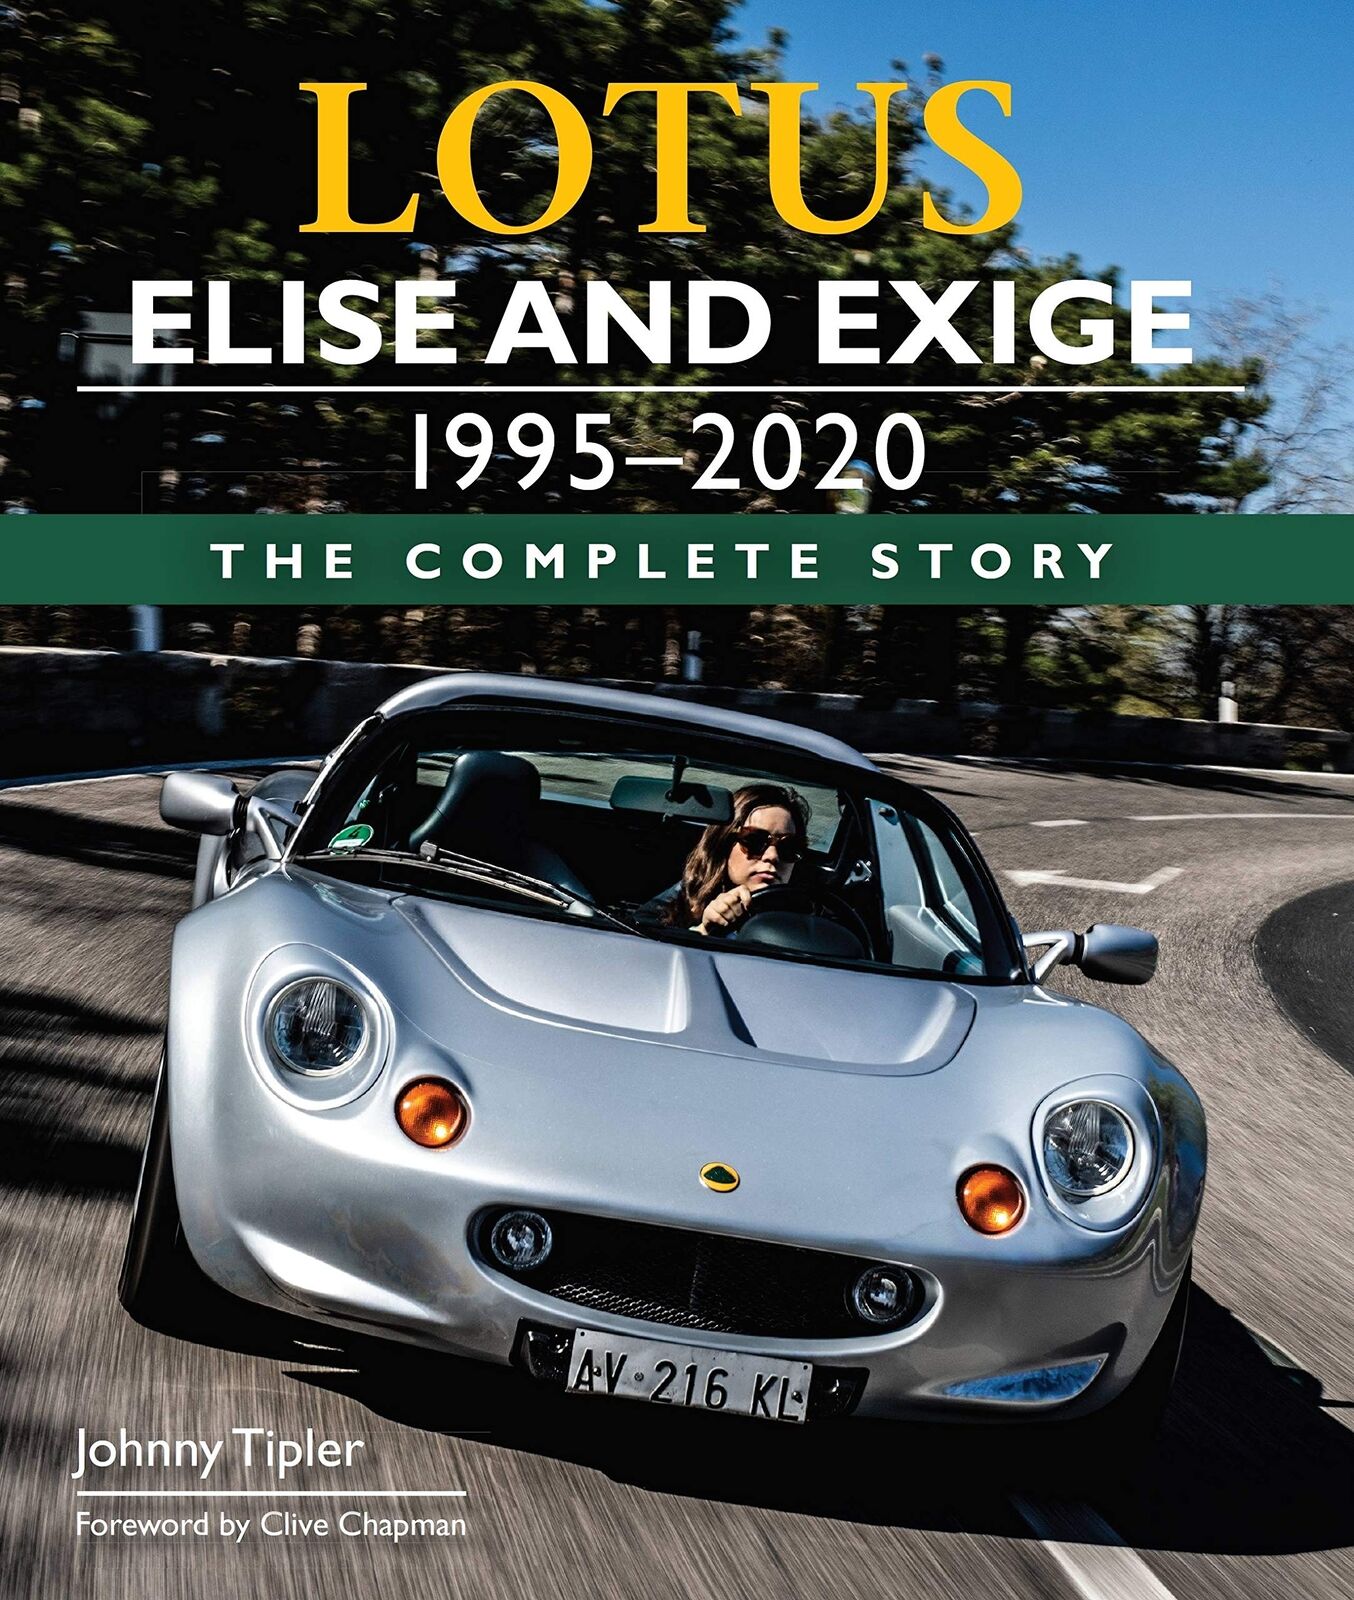 Lotus Elise and Exige 1995-2020 book